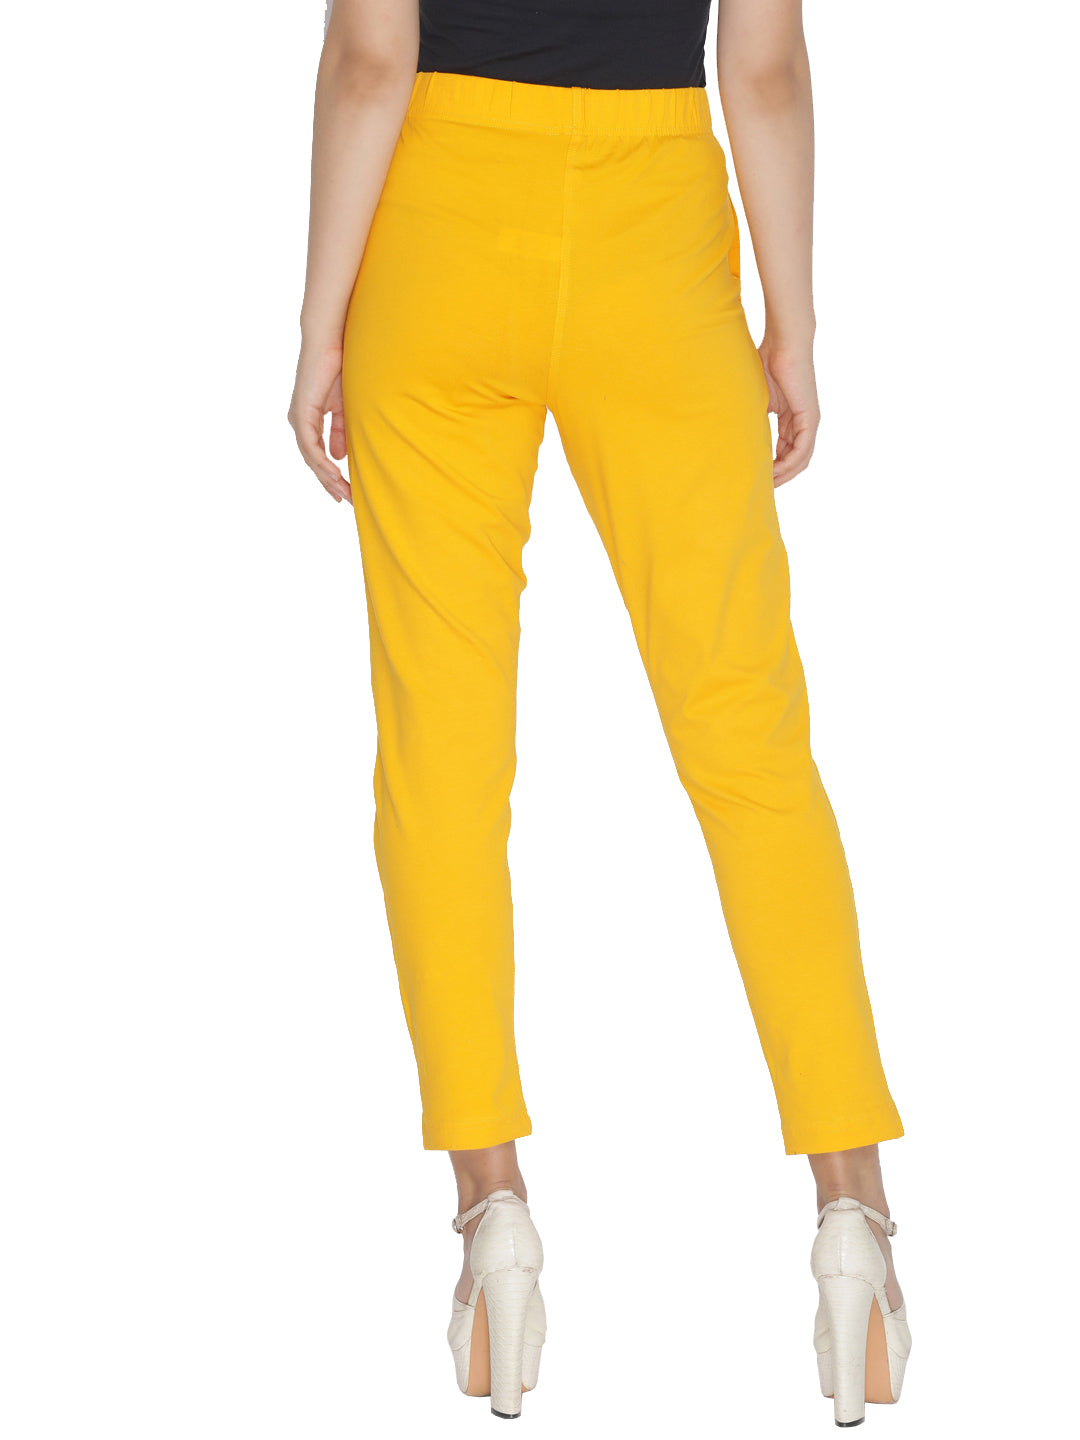 Buy Anubhutee Women's Yellow Gold Printed Sequinned Kurta Set with Trousers  – Anubhutee-store